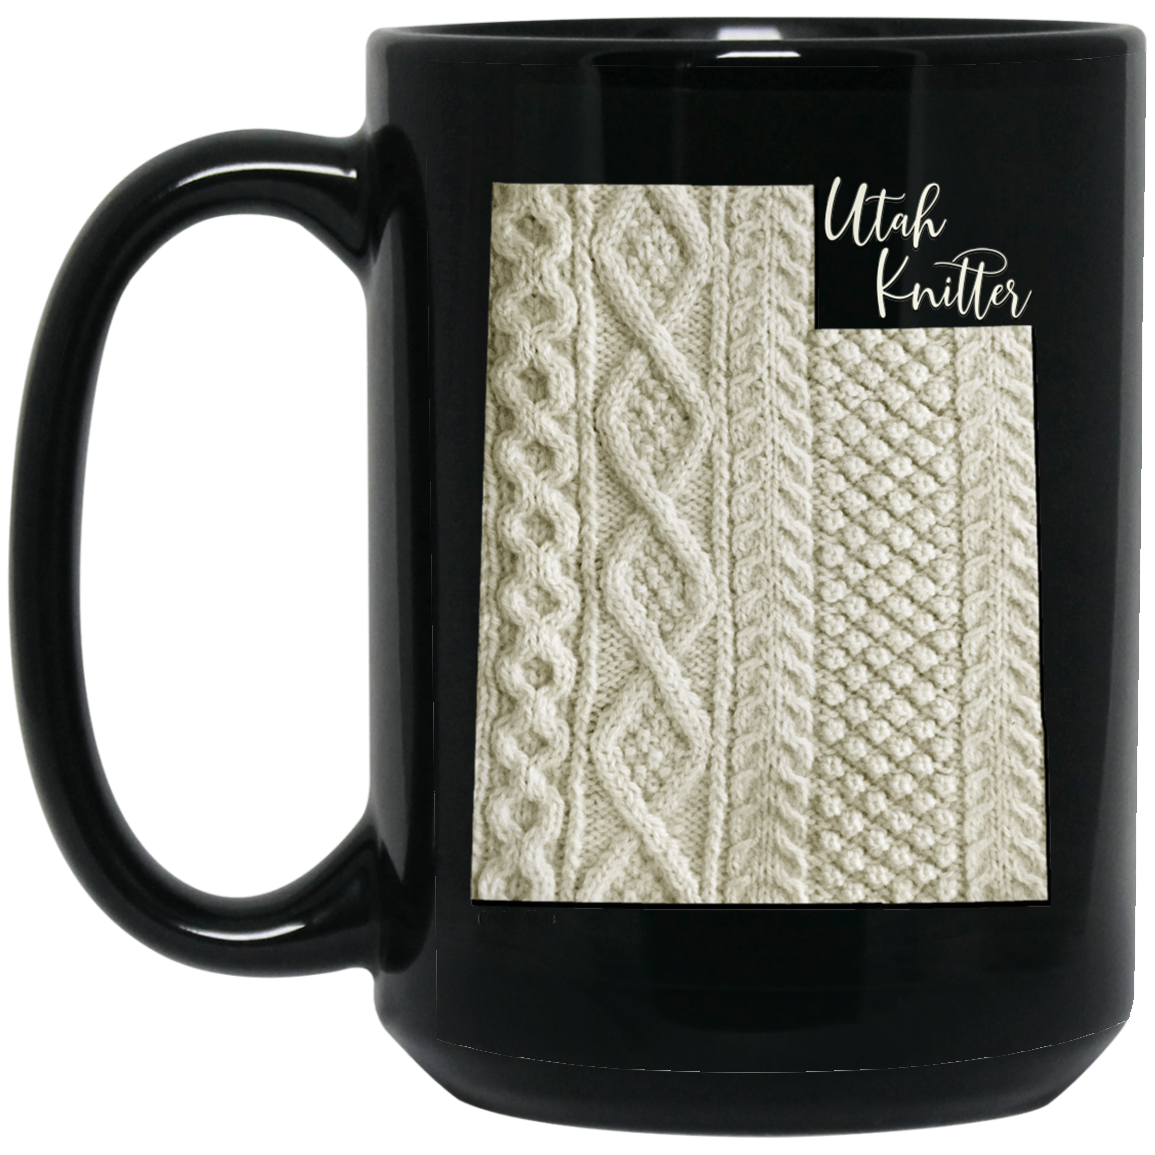 Utah Knitter Mugs